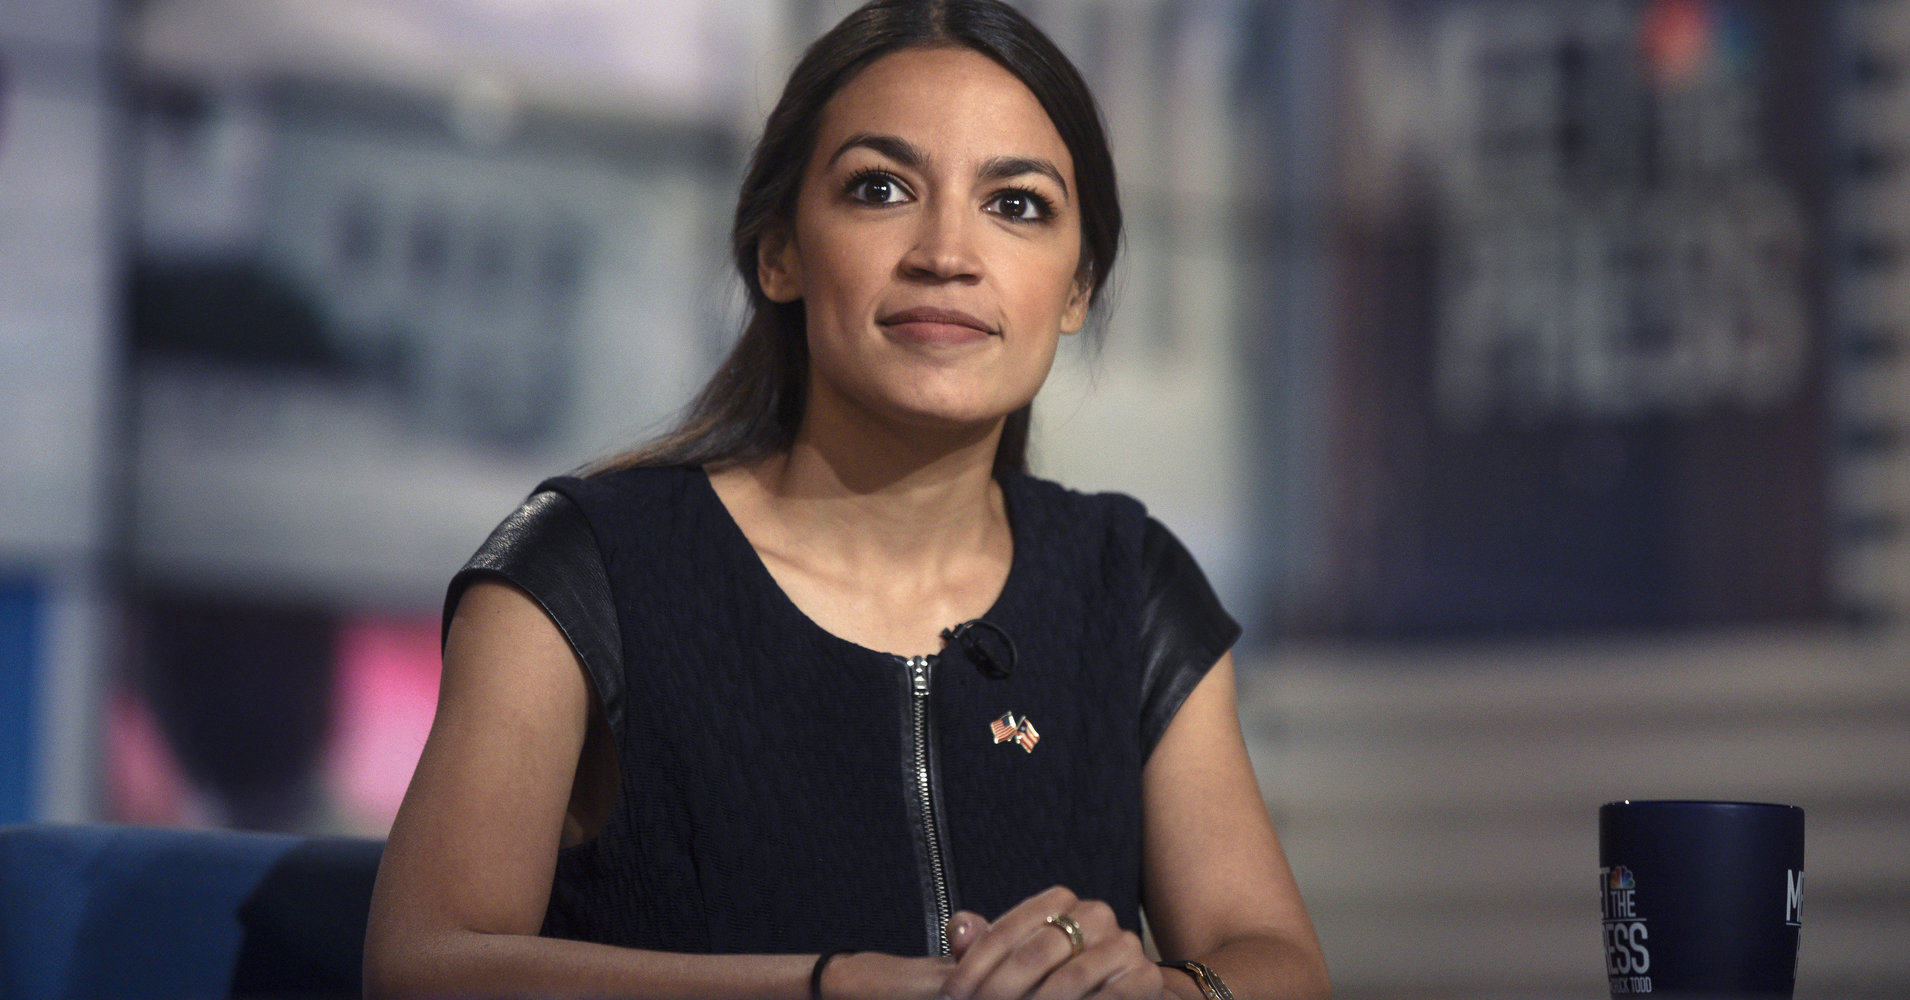 Alexandria Ocasio-Cortez, Democratic Nominee for New York's 14th Congressional District